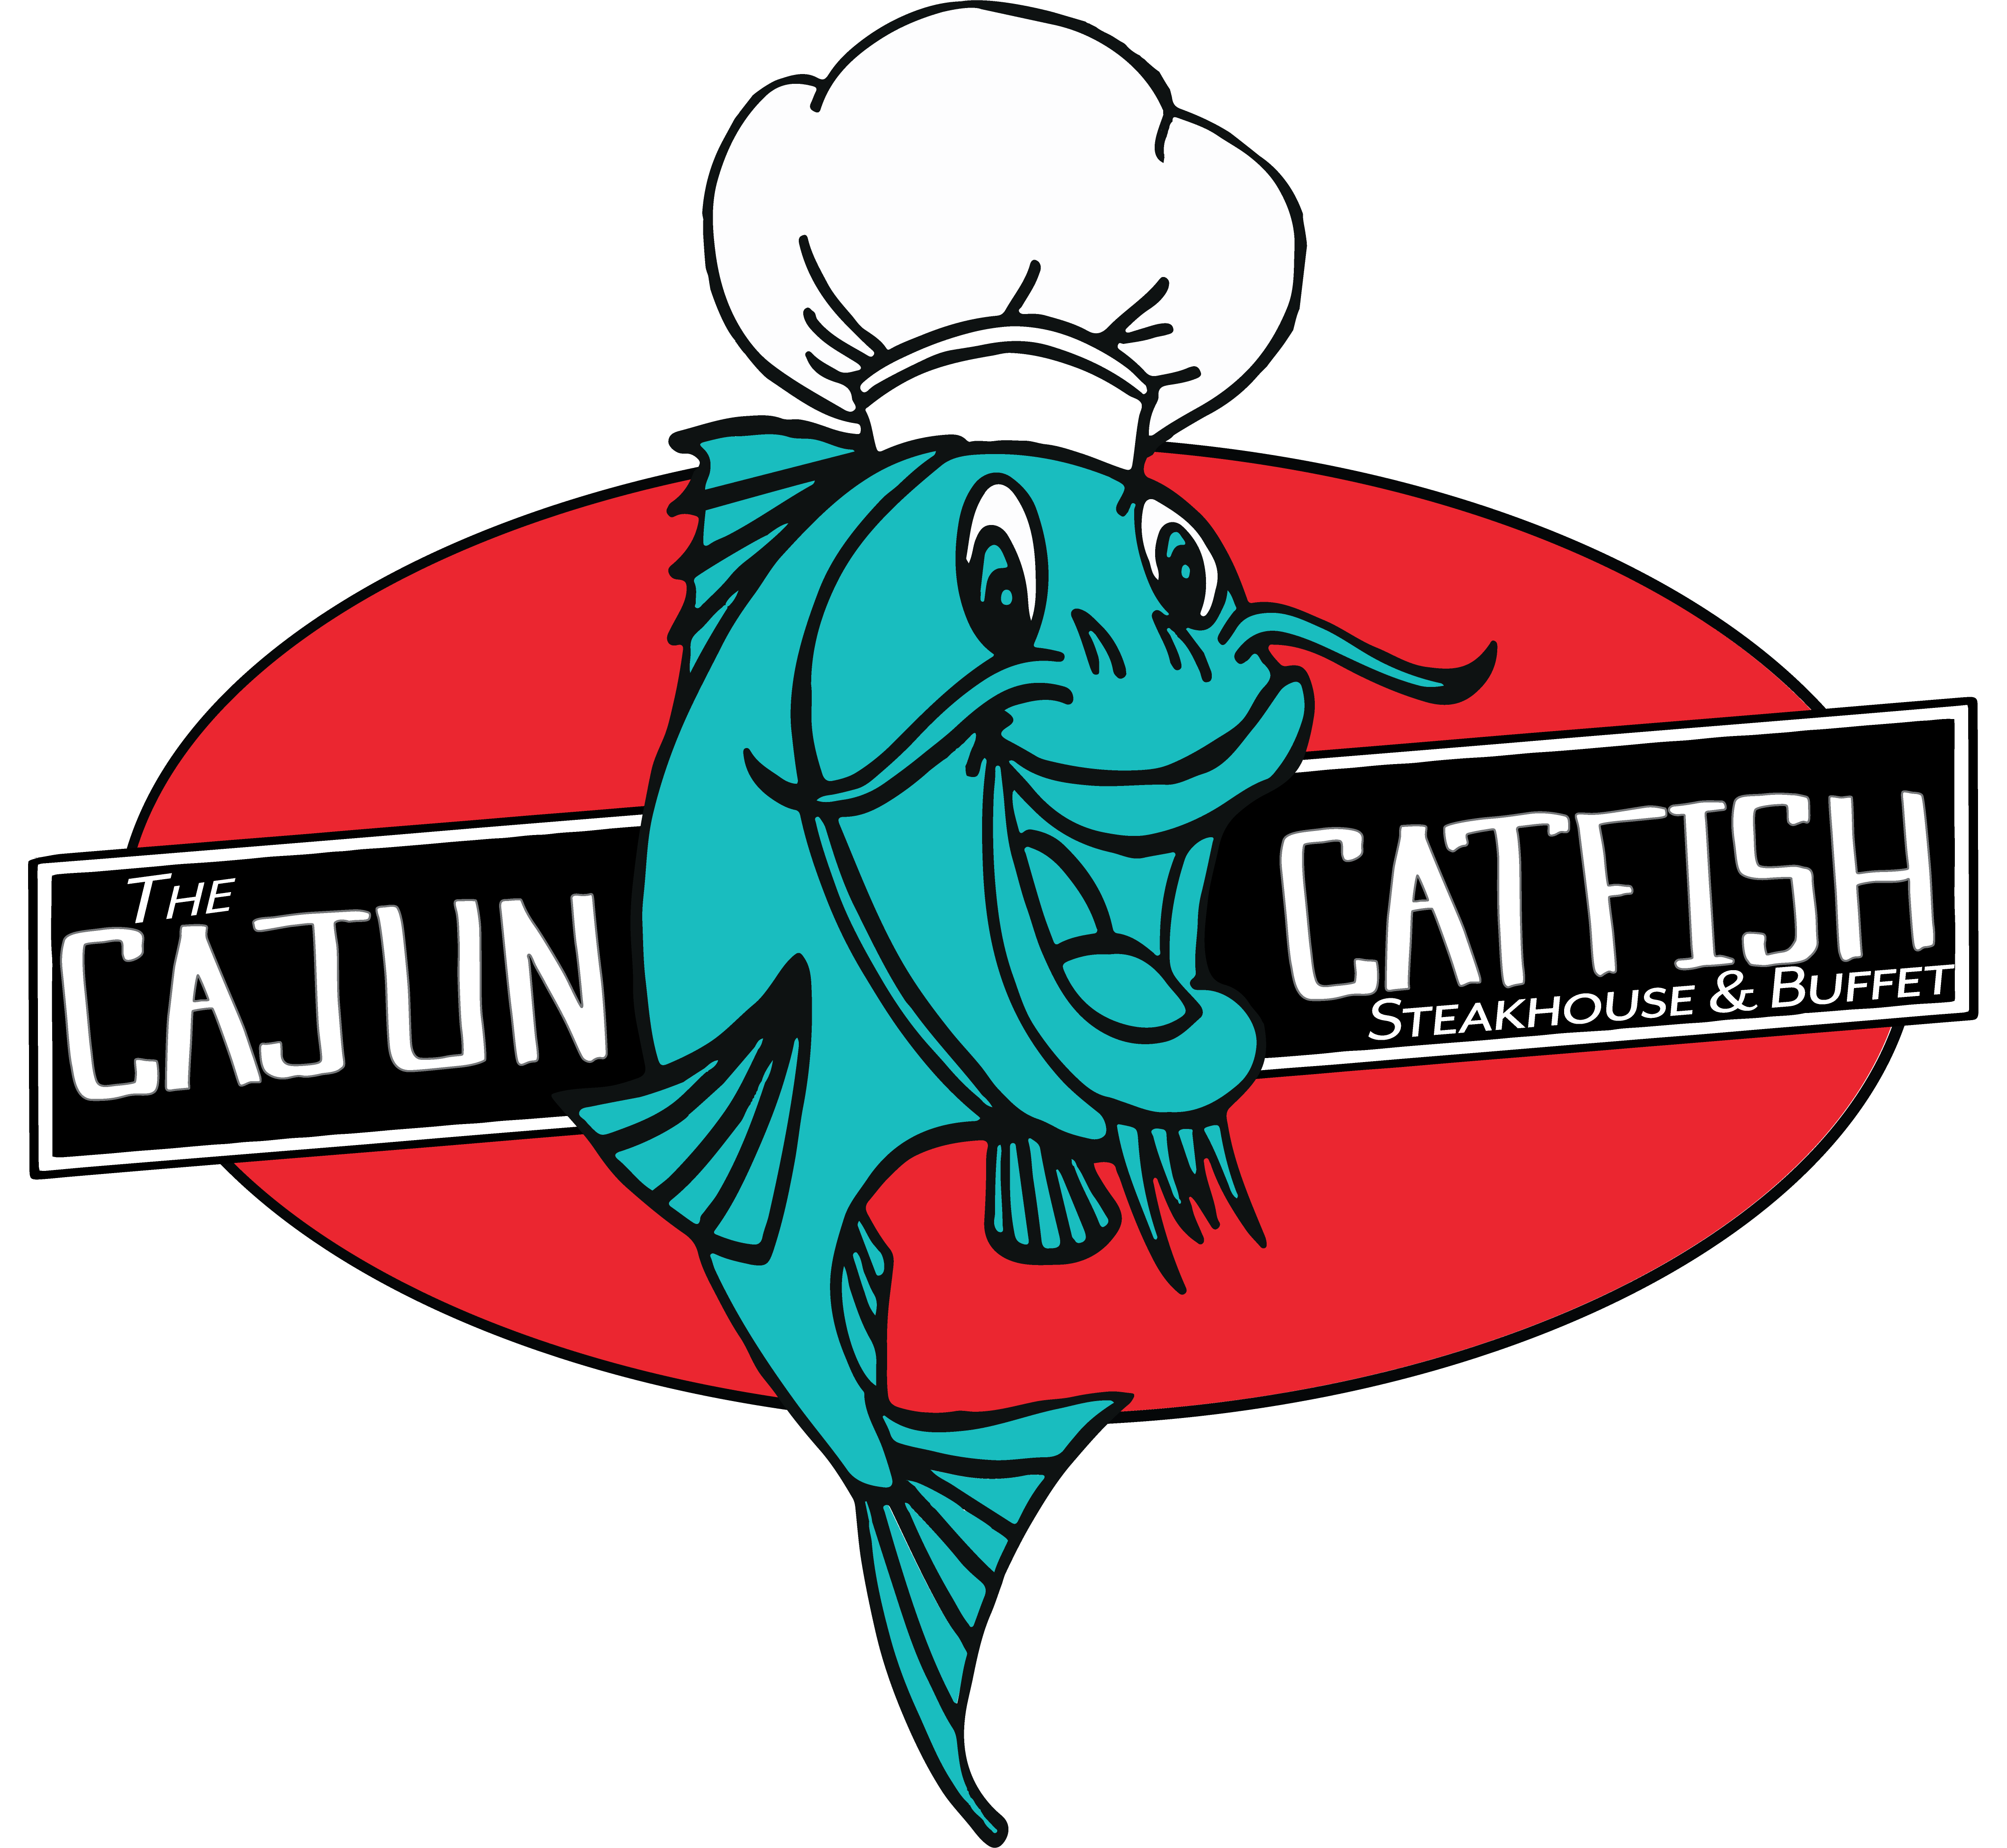 Cajun Catfish